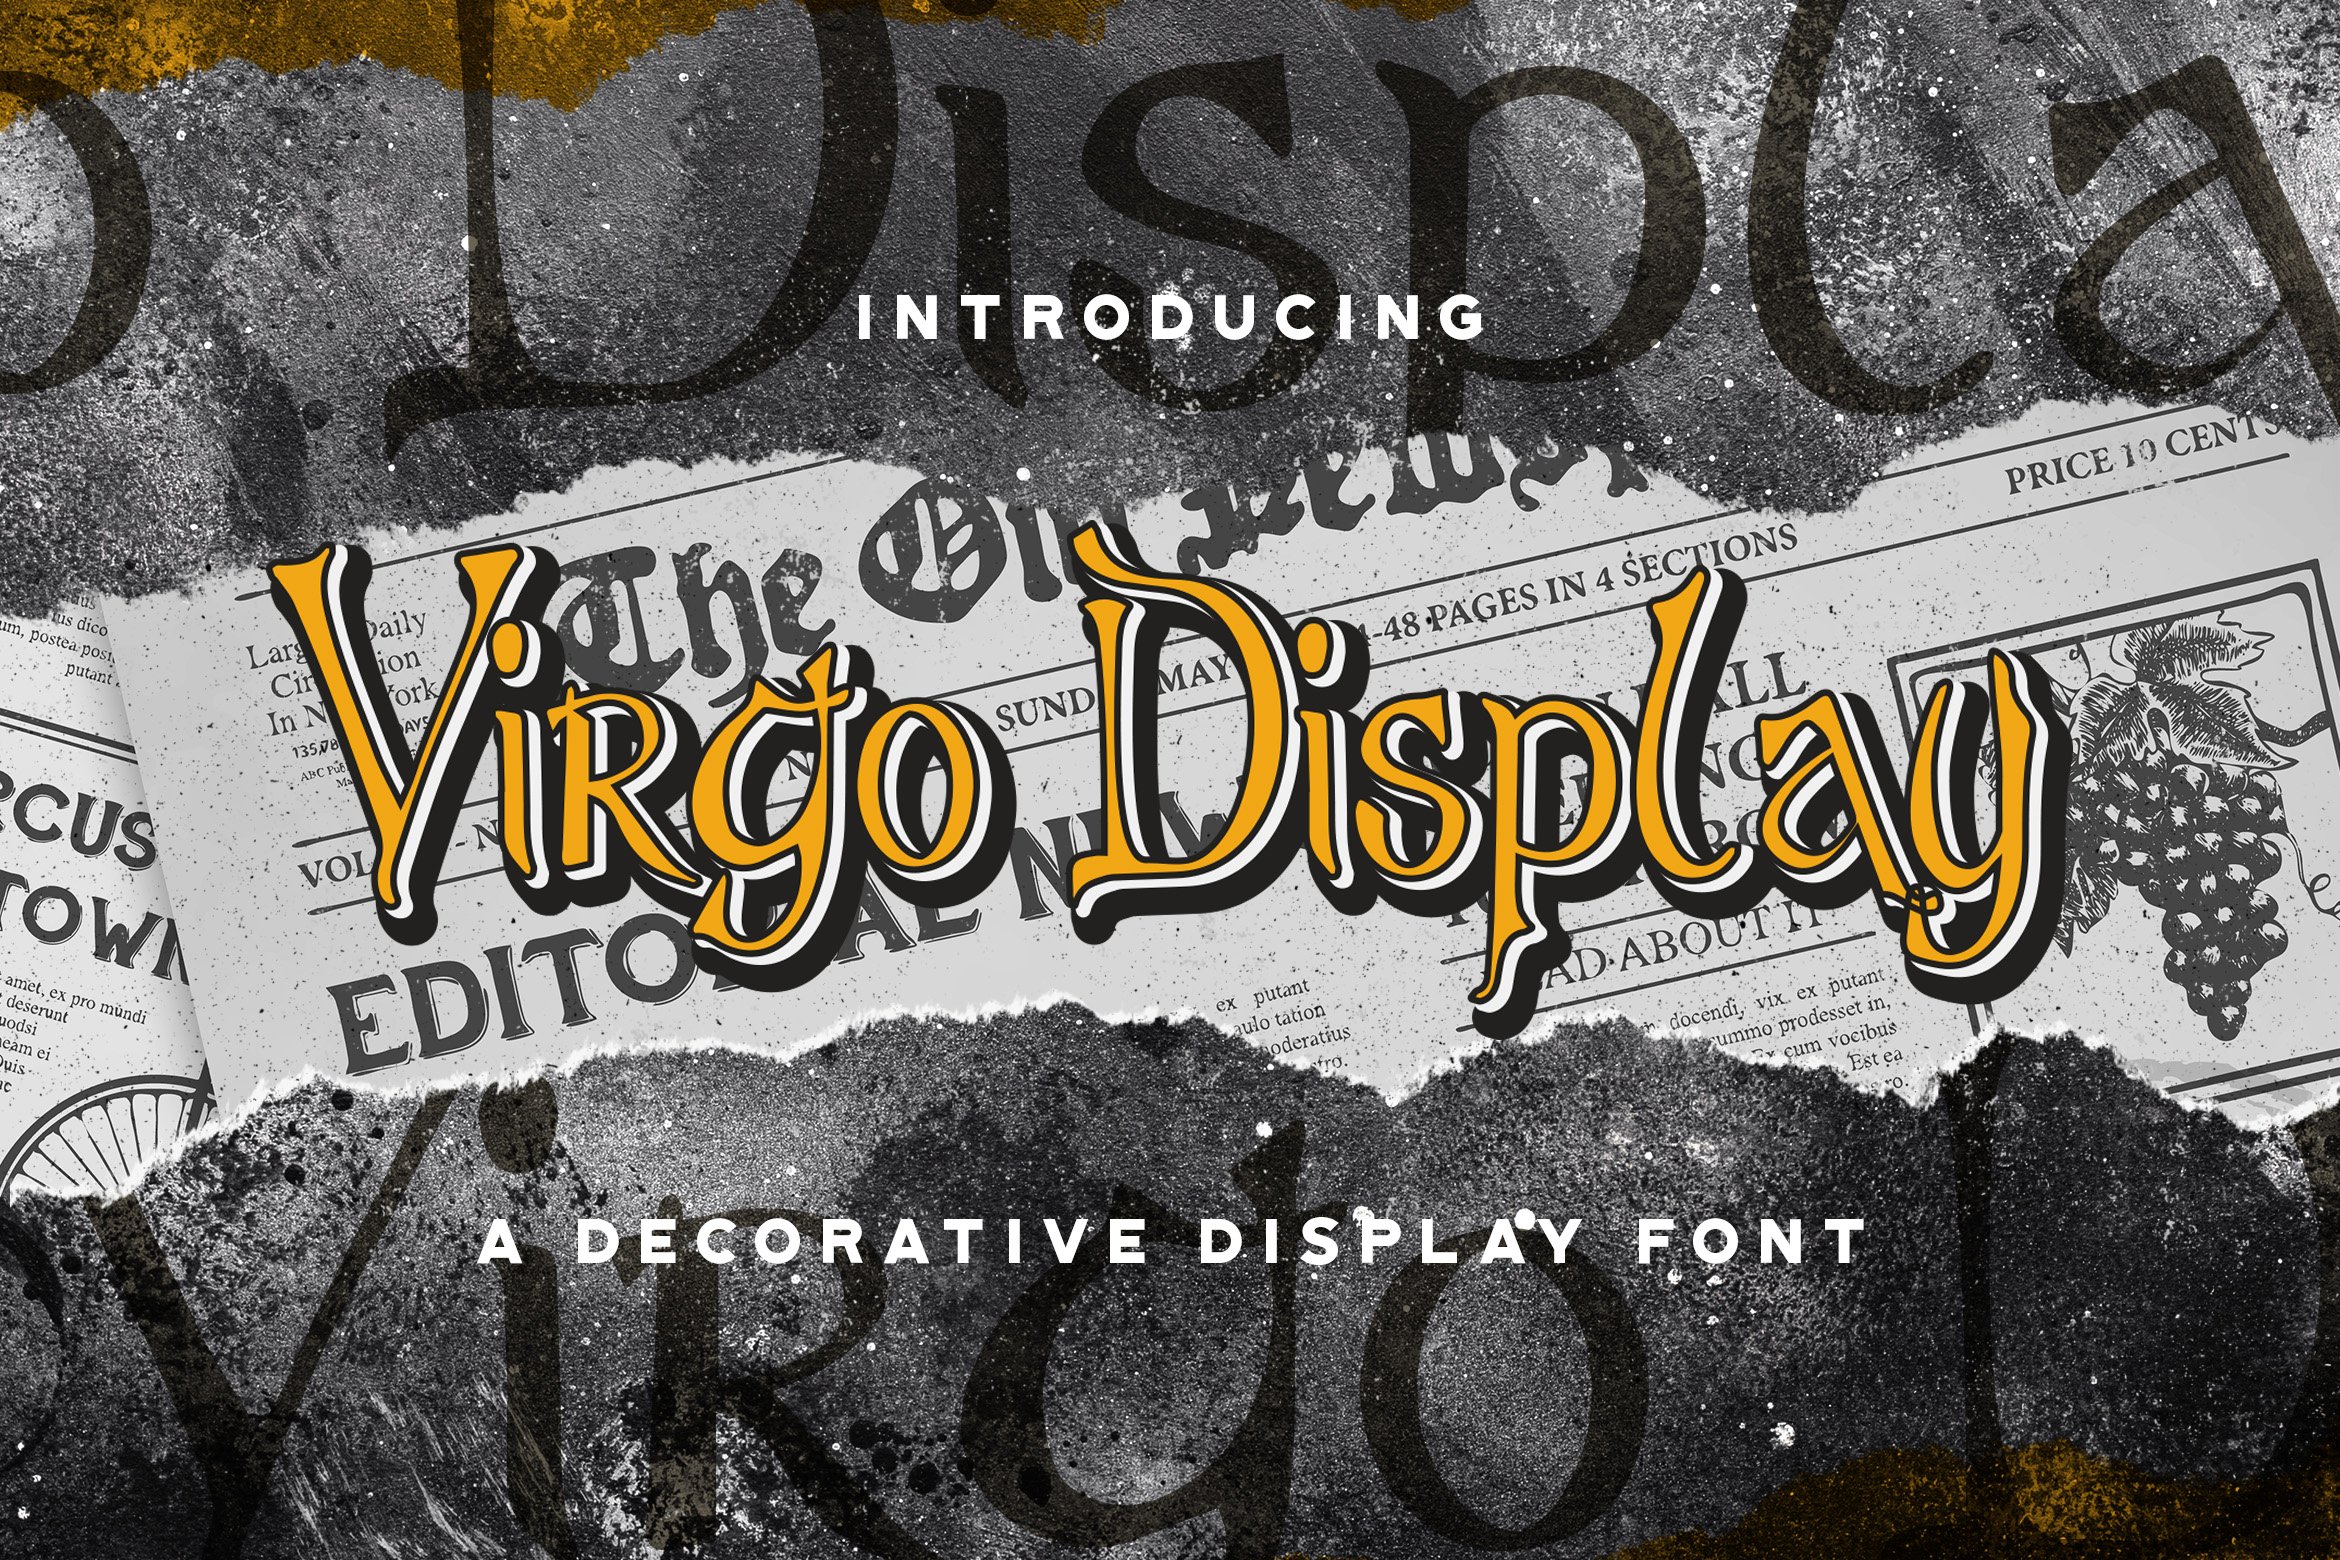 Virgo Display - Haunted Display Font cover image.